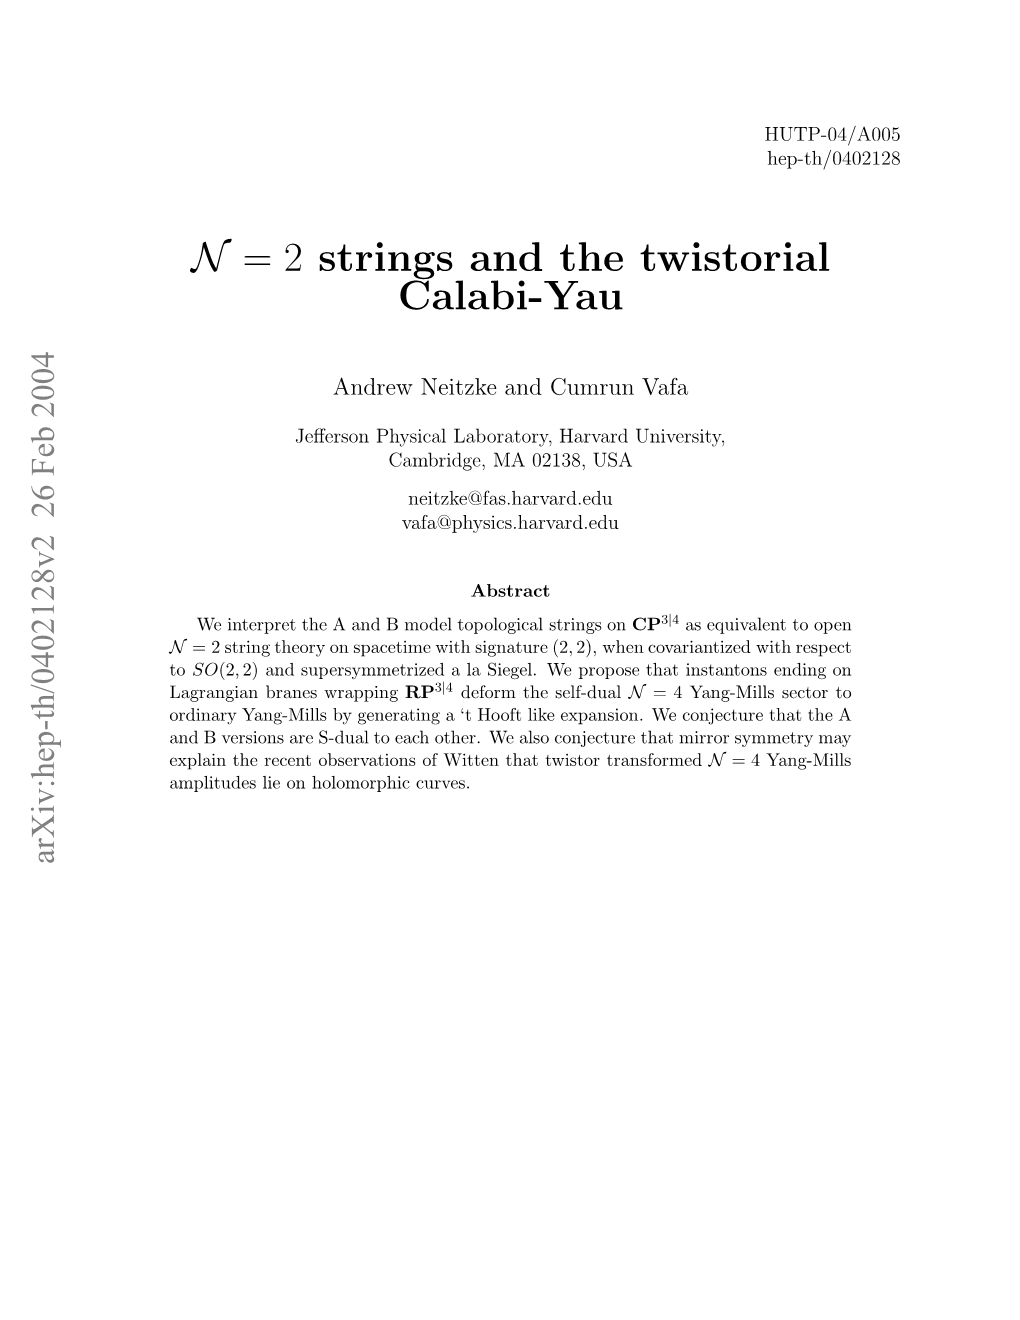 N = 2 Strings and the Twistorial Calabi-Yau